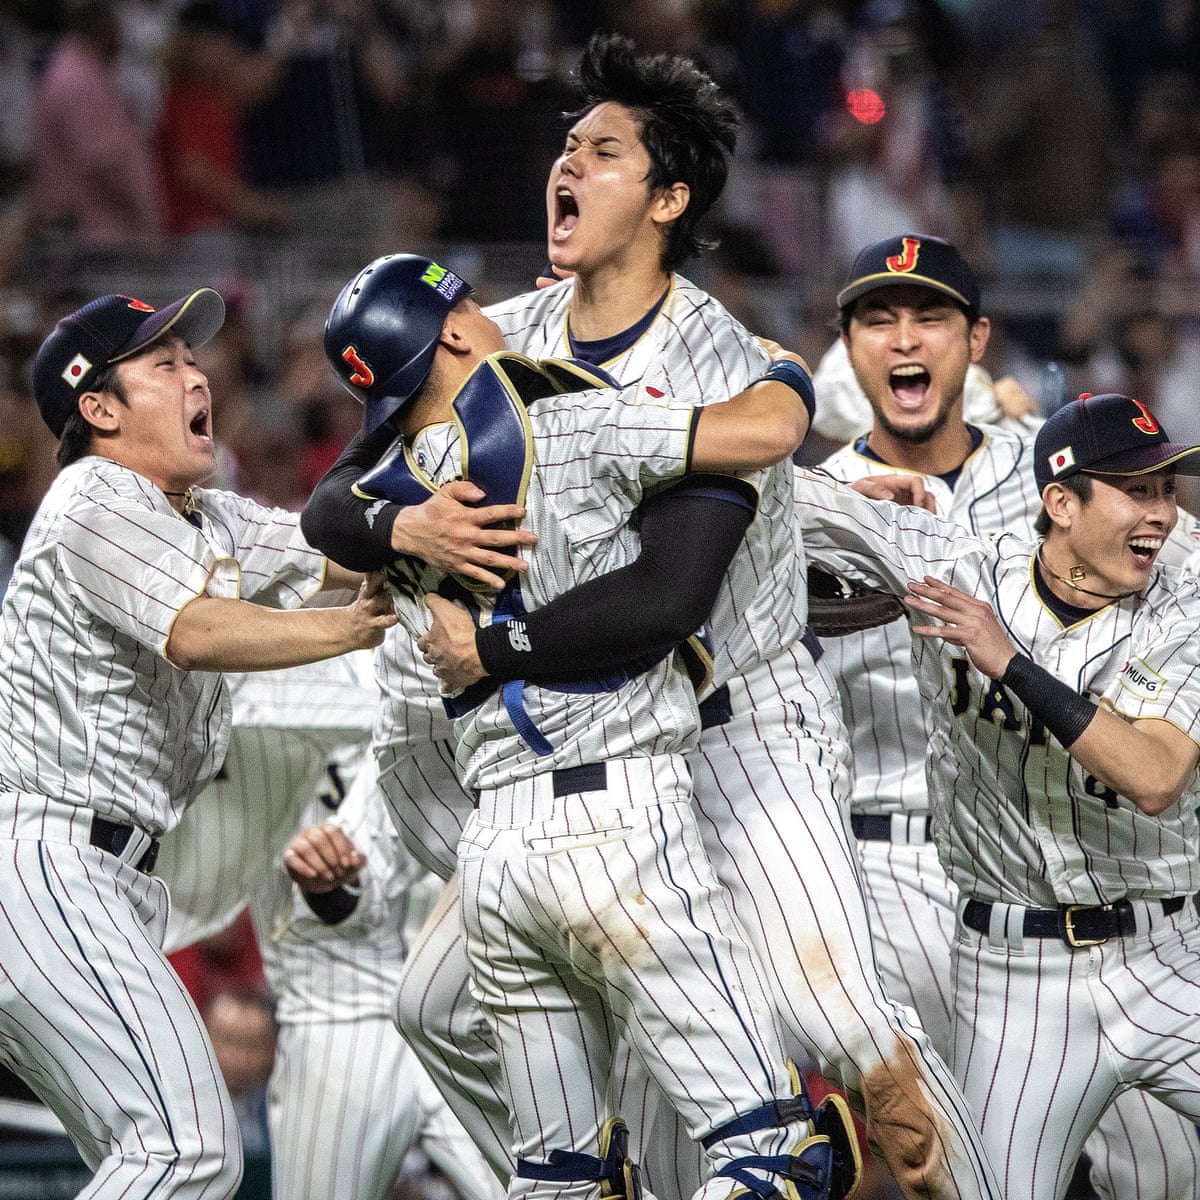 Shohei Ohtani Japan Baseball Legends 2023 World Baseball Classic